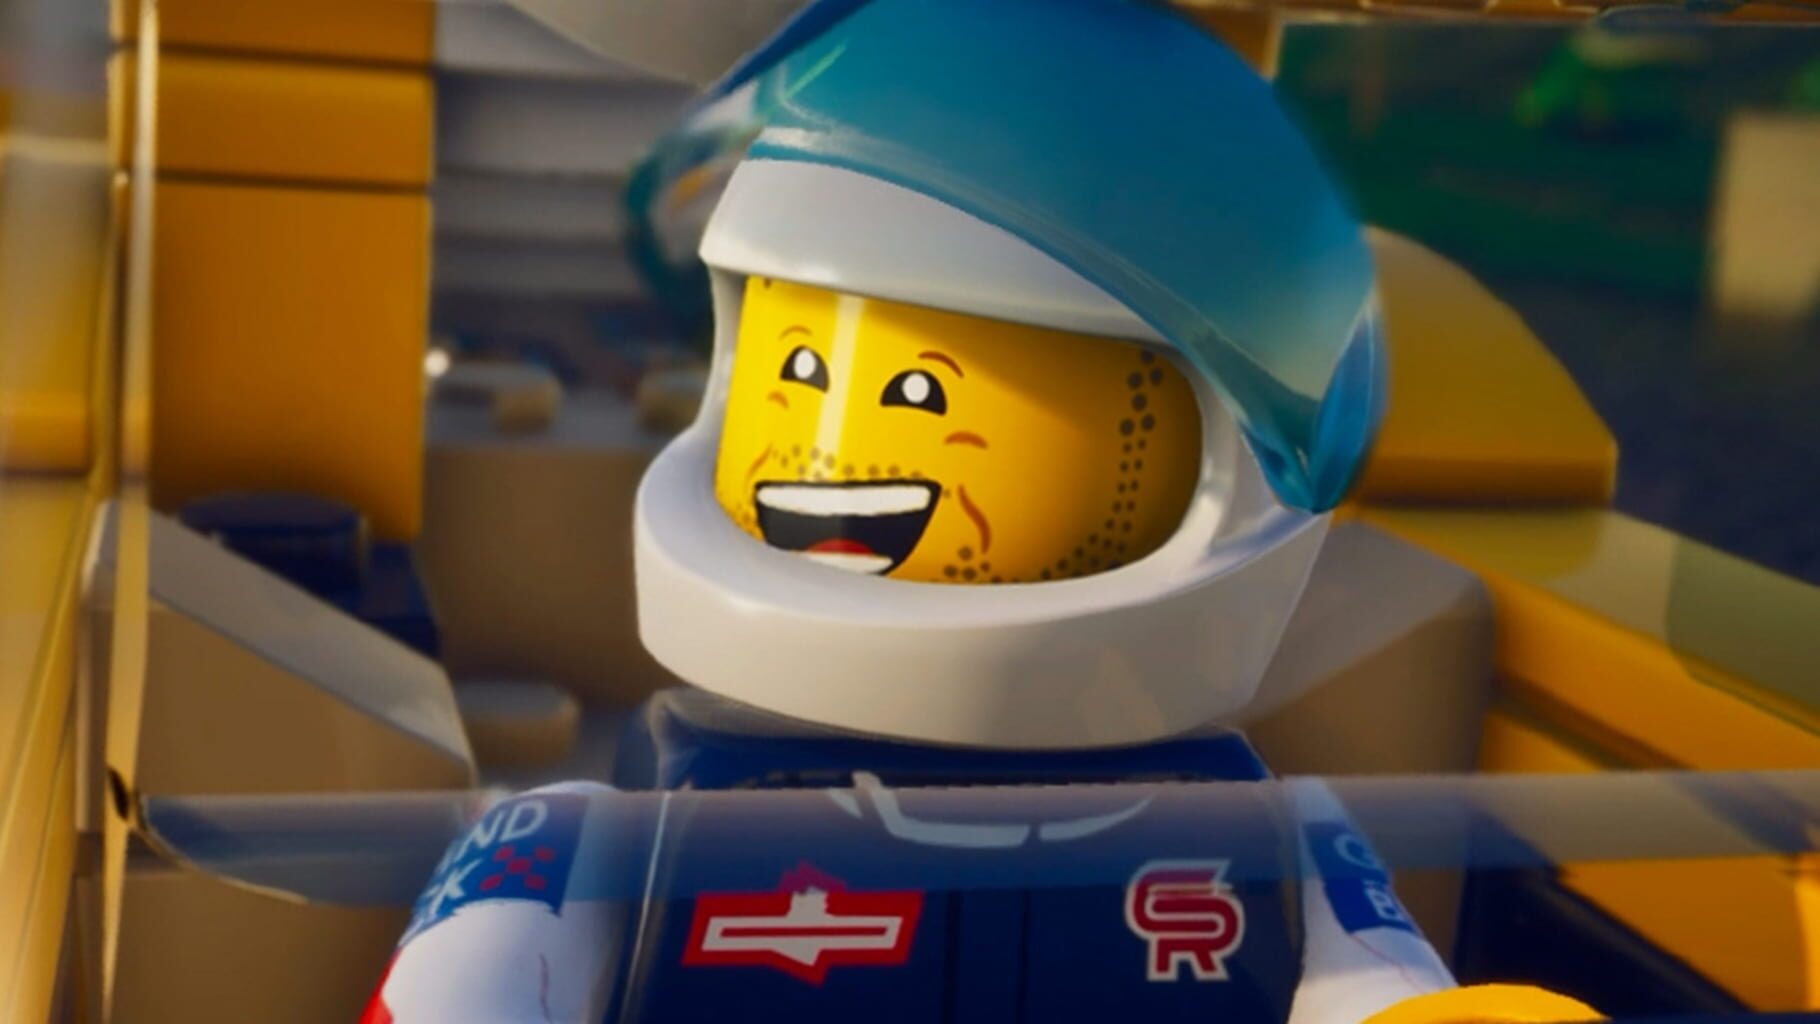 LEGO 2K Drive: Year 1 Drive Pass Image